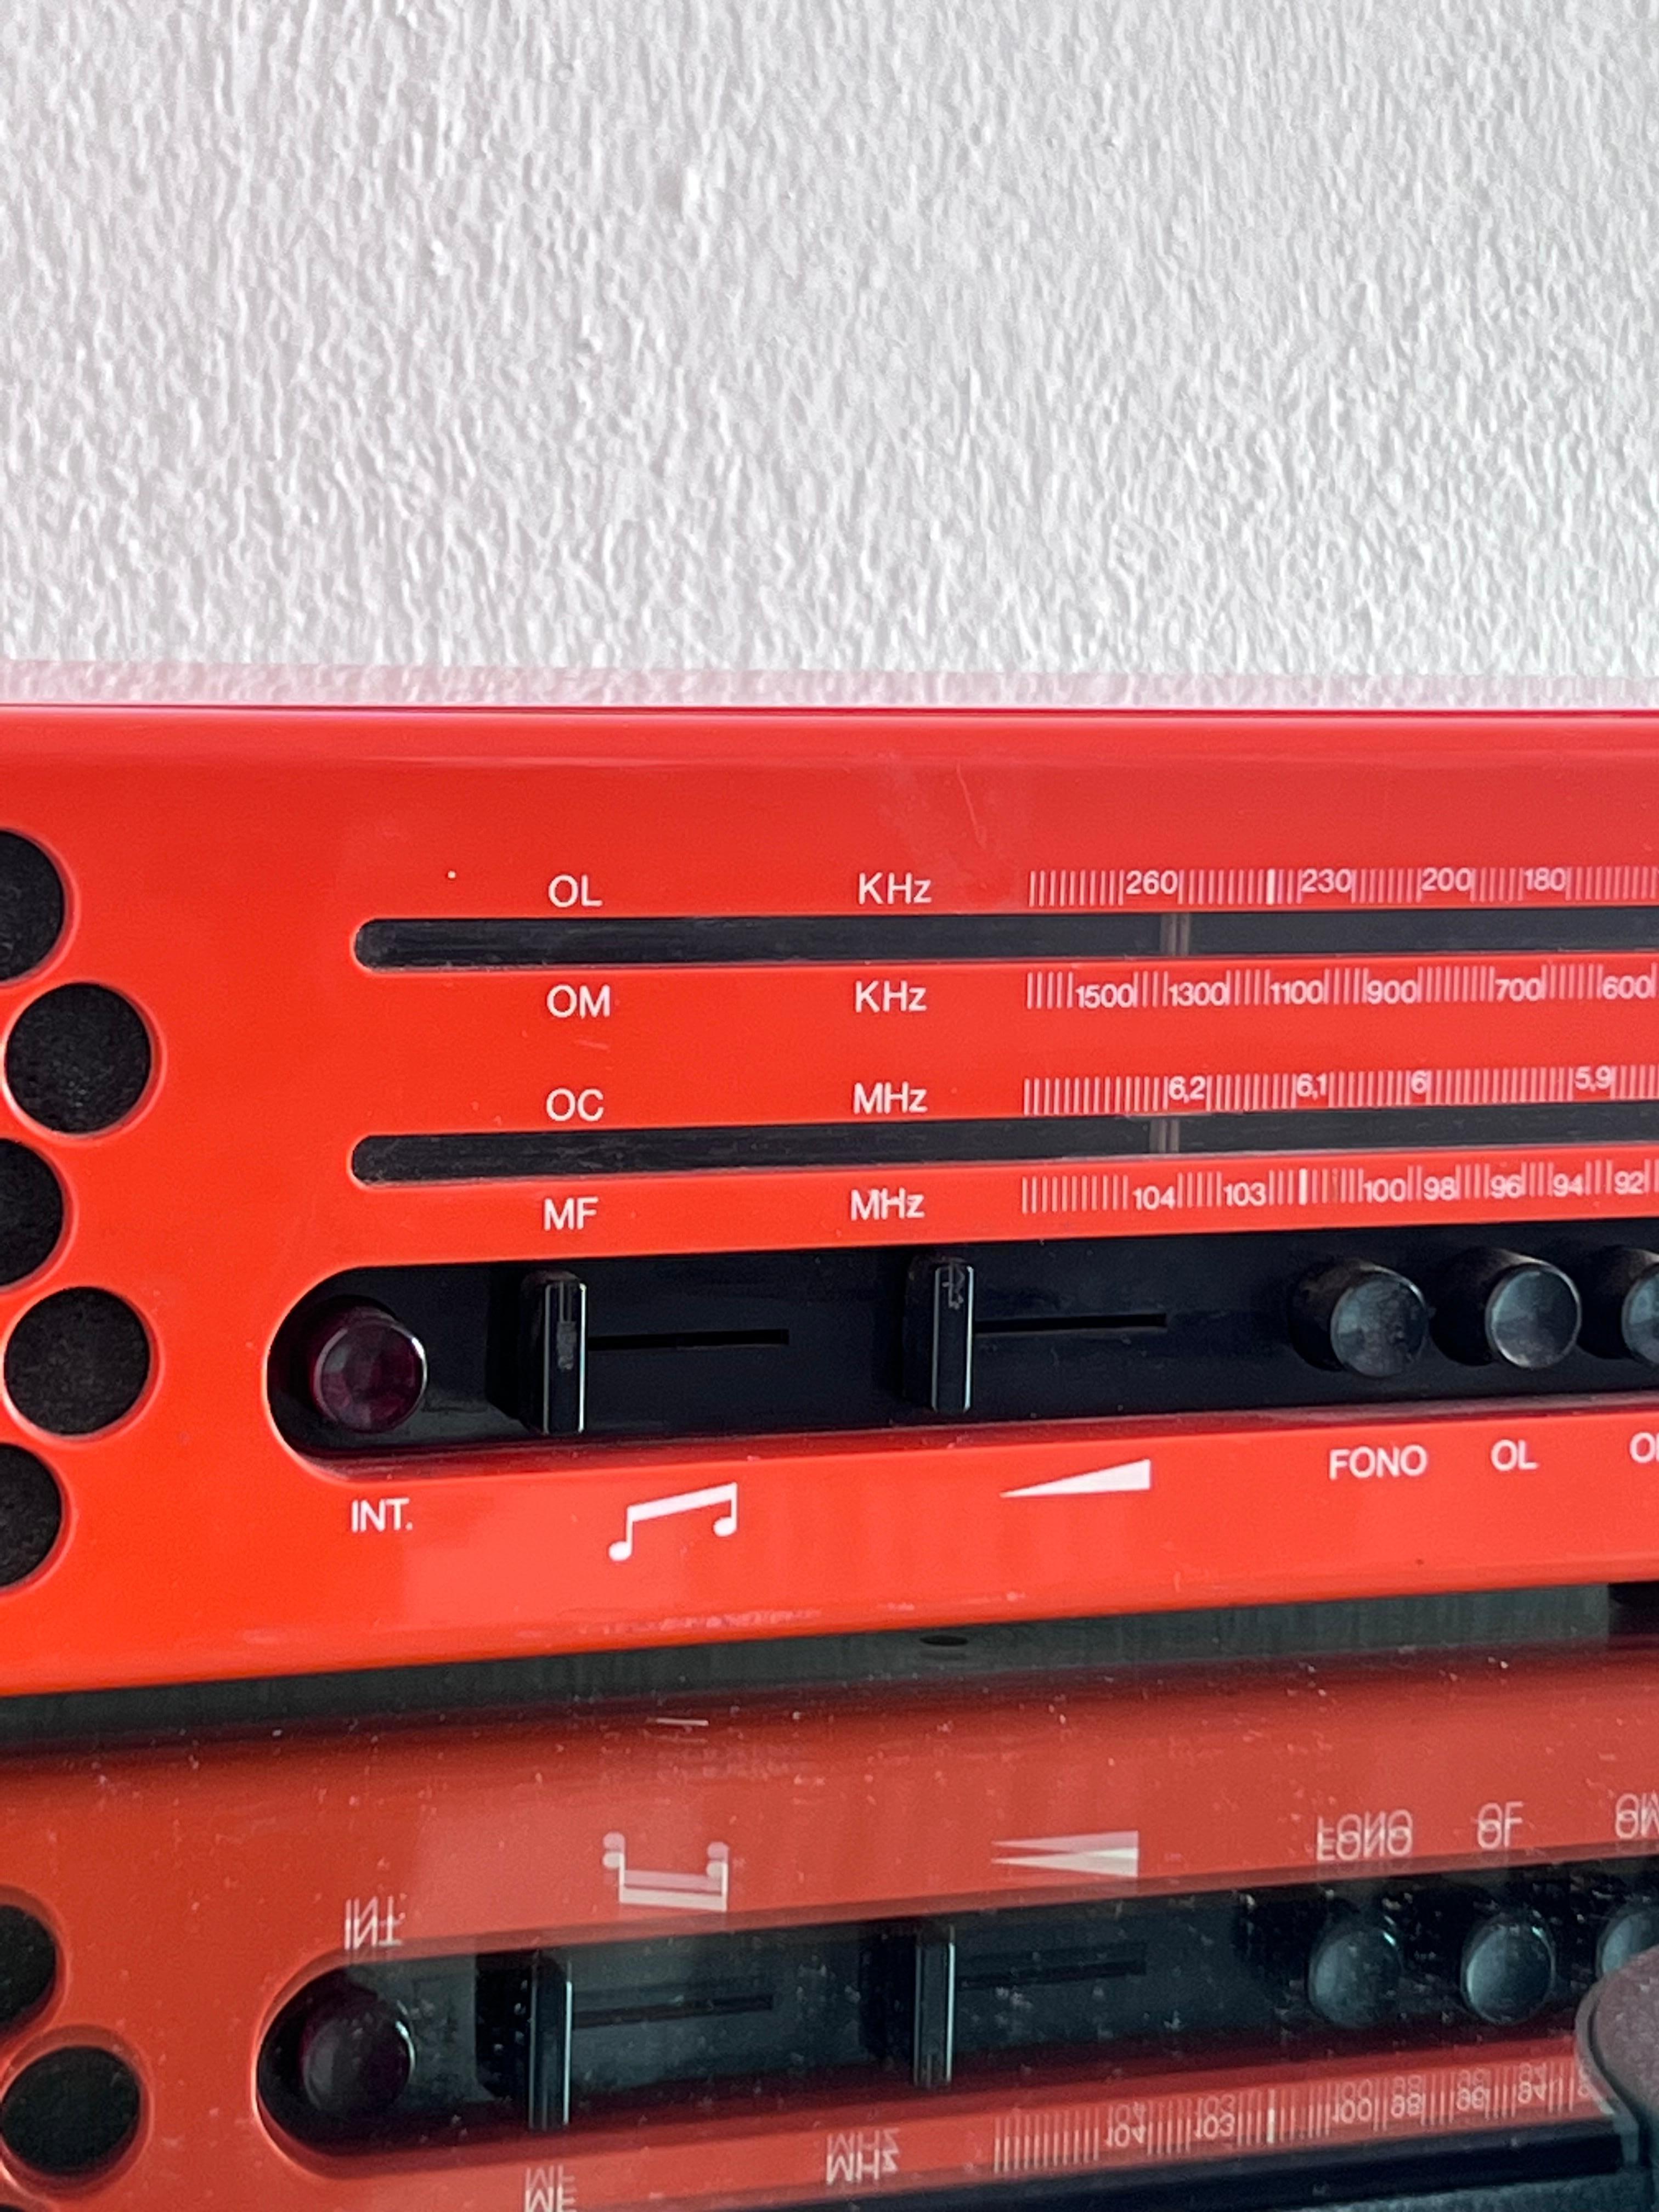 Plastic Vintage German Made Telefunken Kra Red Bakelite Radio, Pop Design, Space Age For Sale